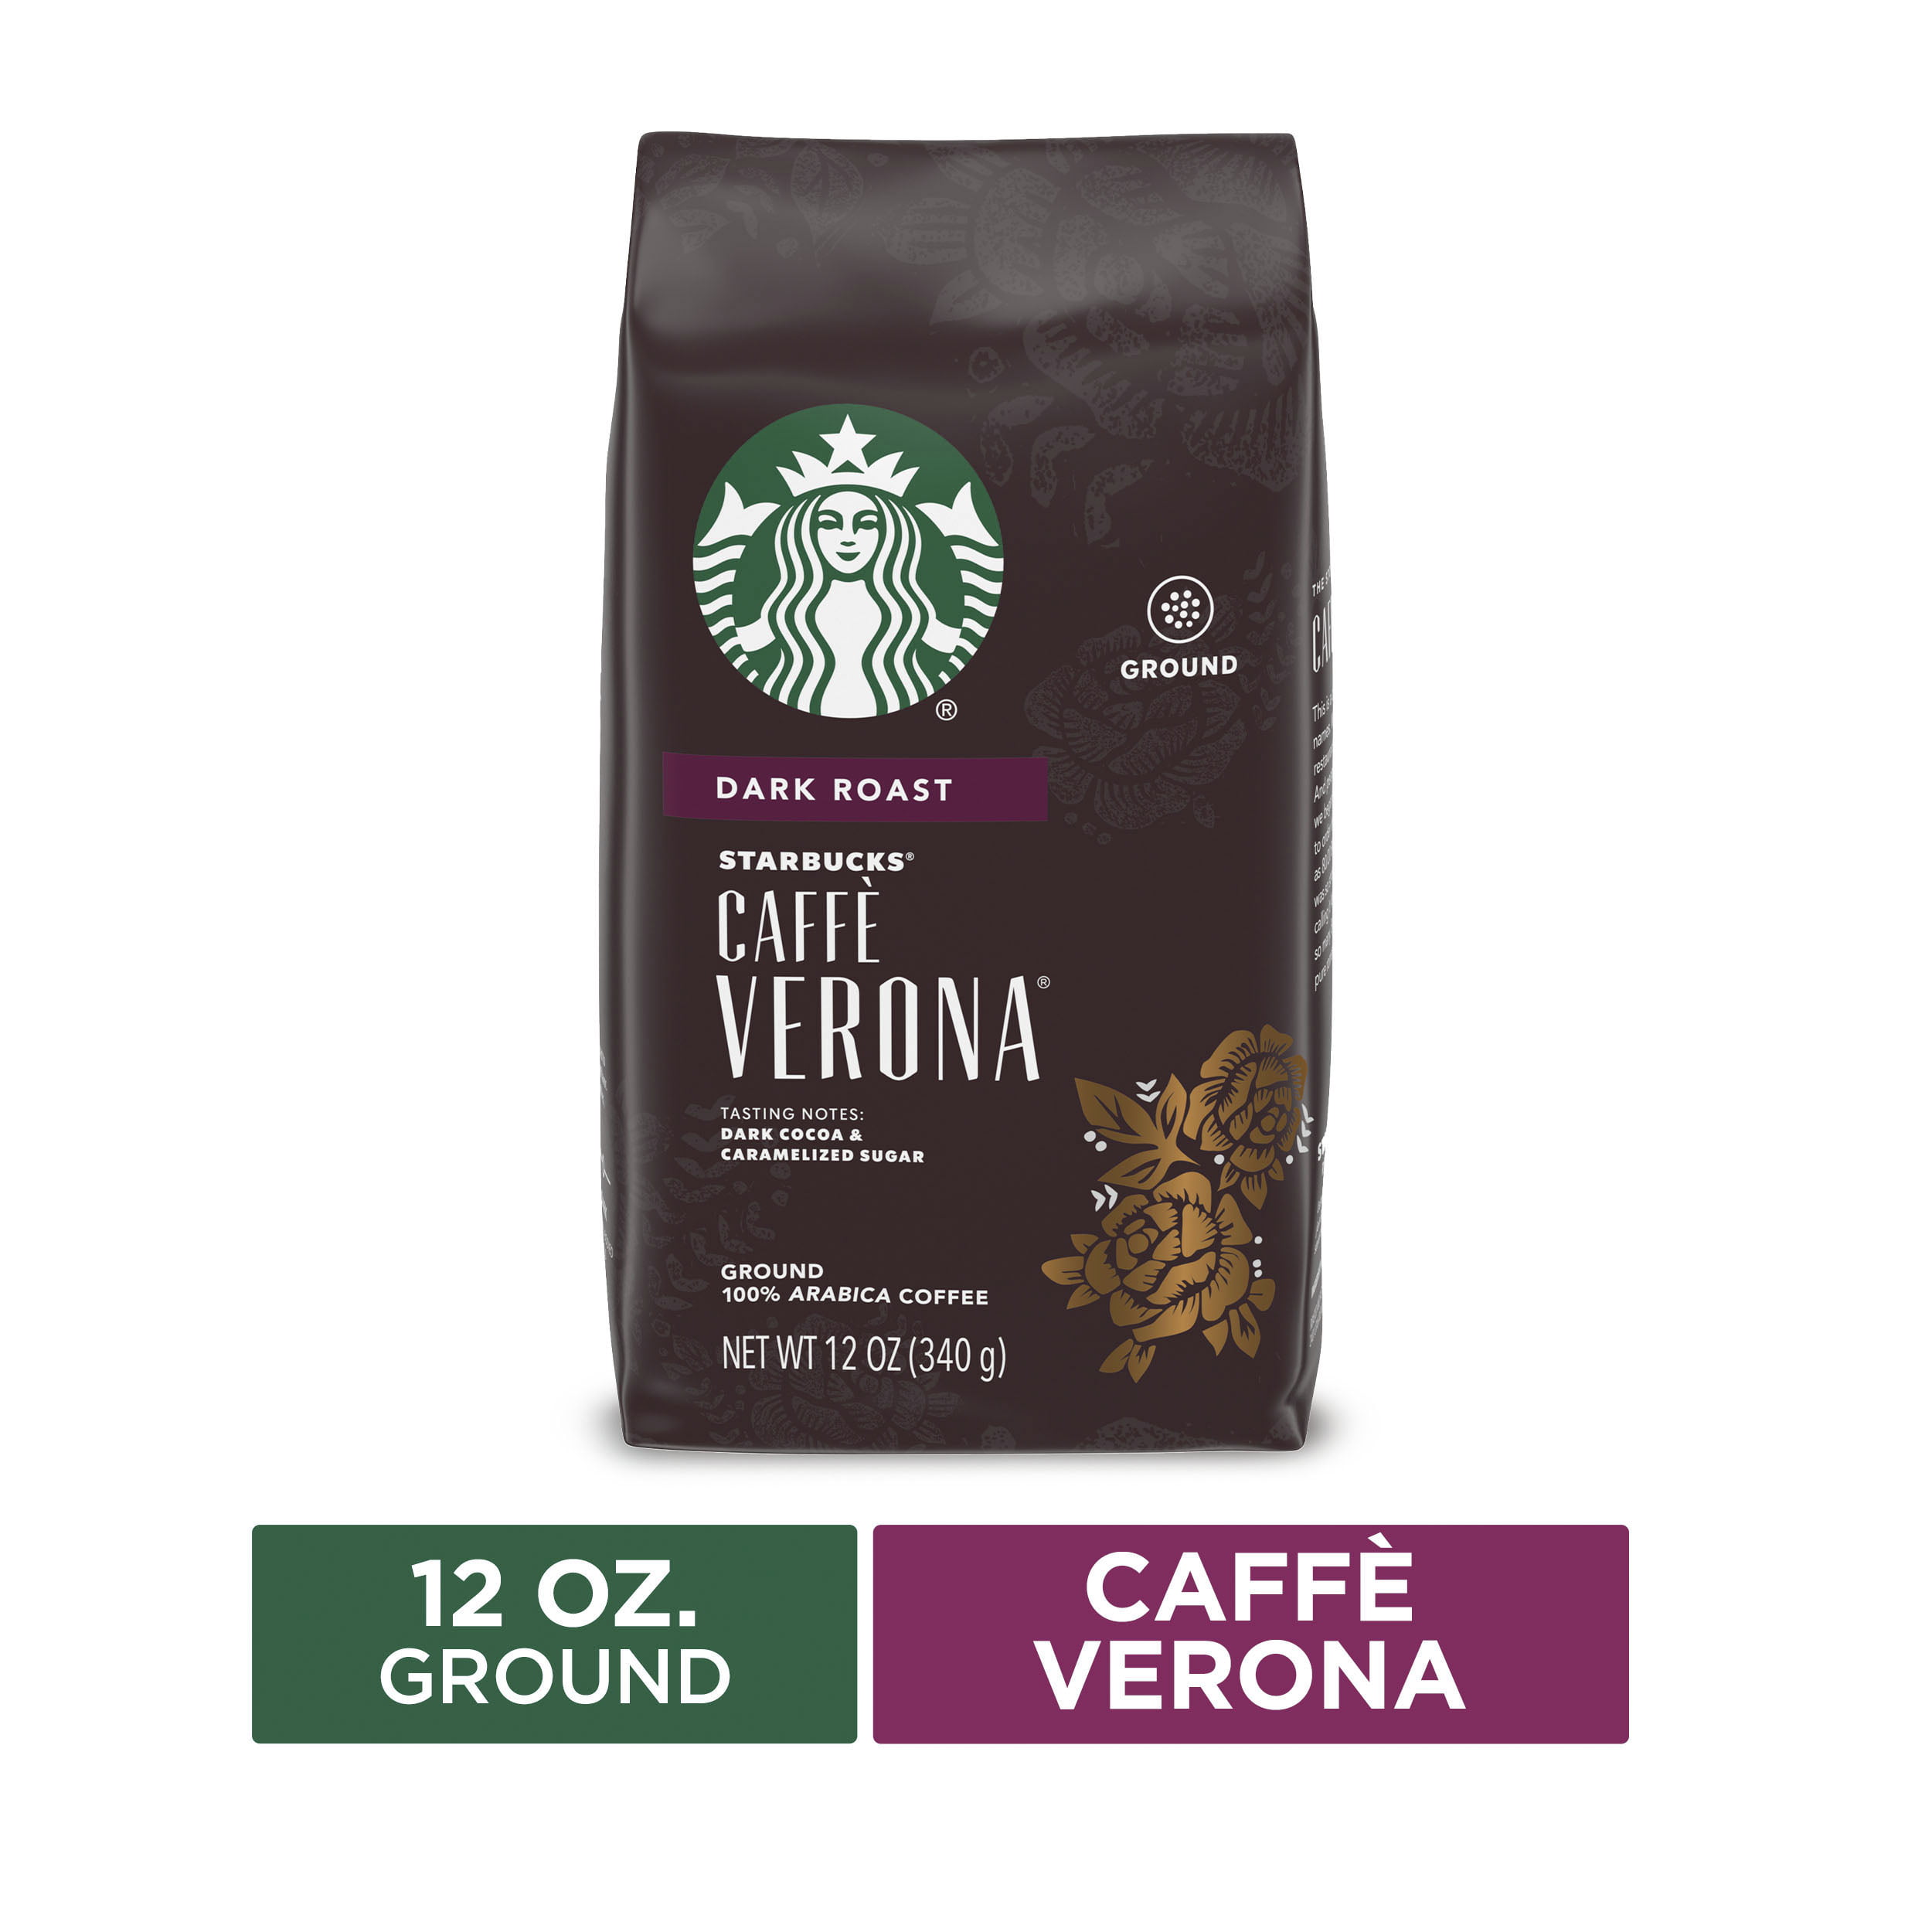 Кофе дарк. Кофе в капсулах Starbucks Caffe Verona. Старбакс кофе Dark. Starbucks кофе Dark. Dark Roast кофе.